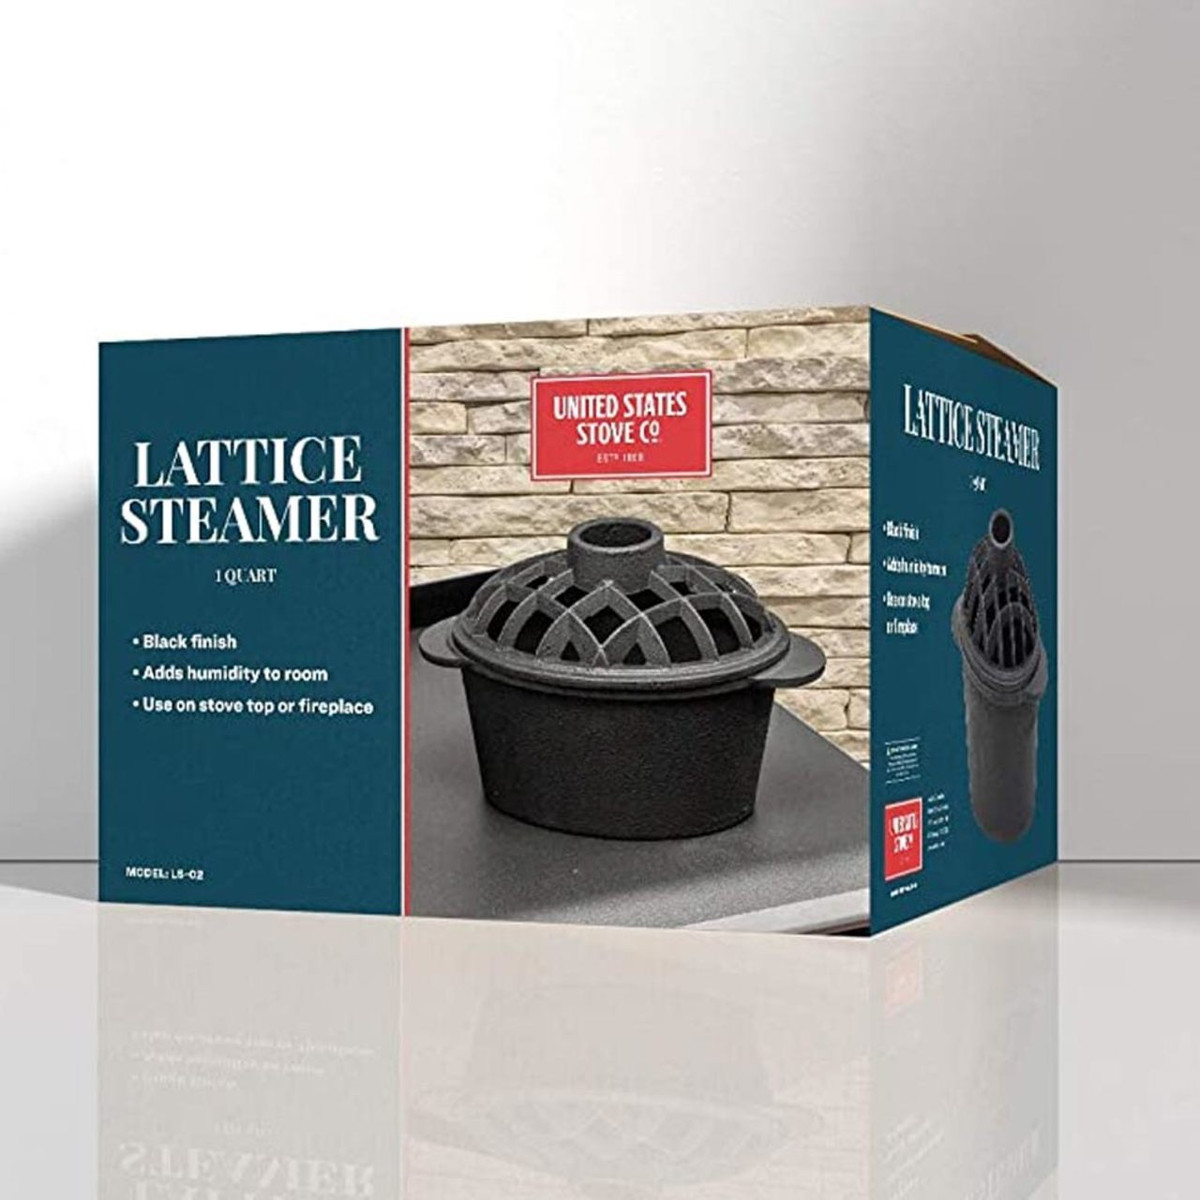 Lattice Steamer